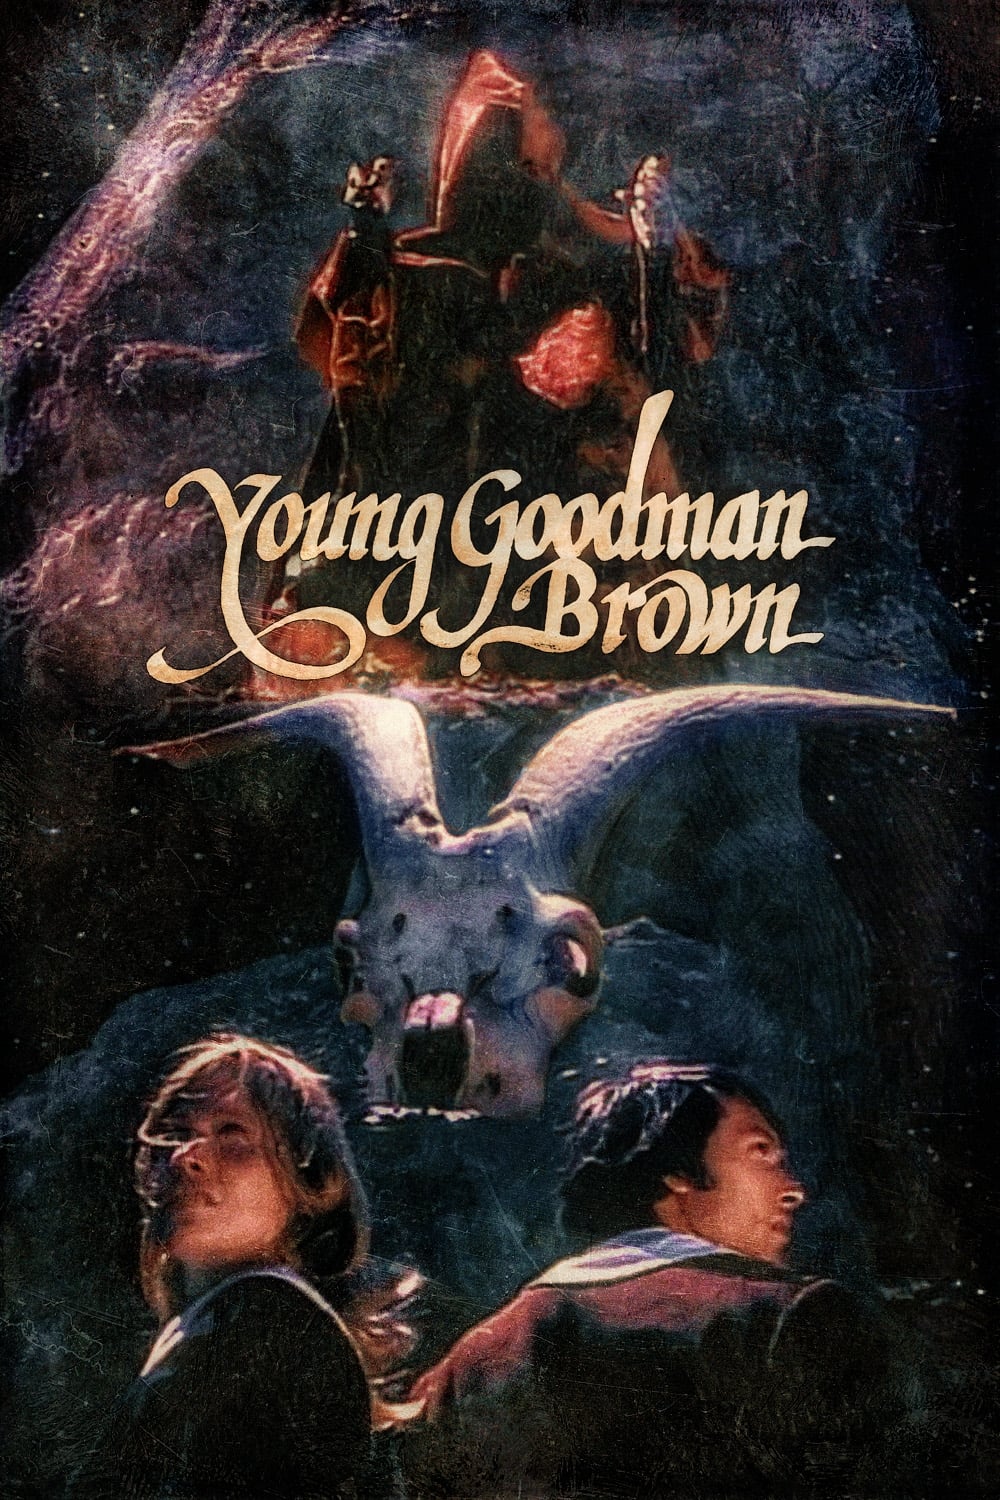 Young Goodman Brown (1993)